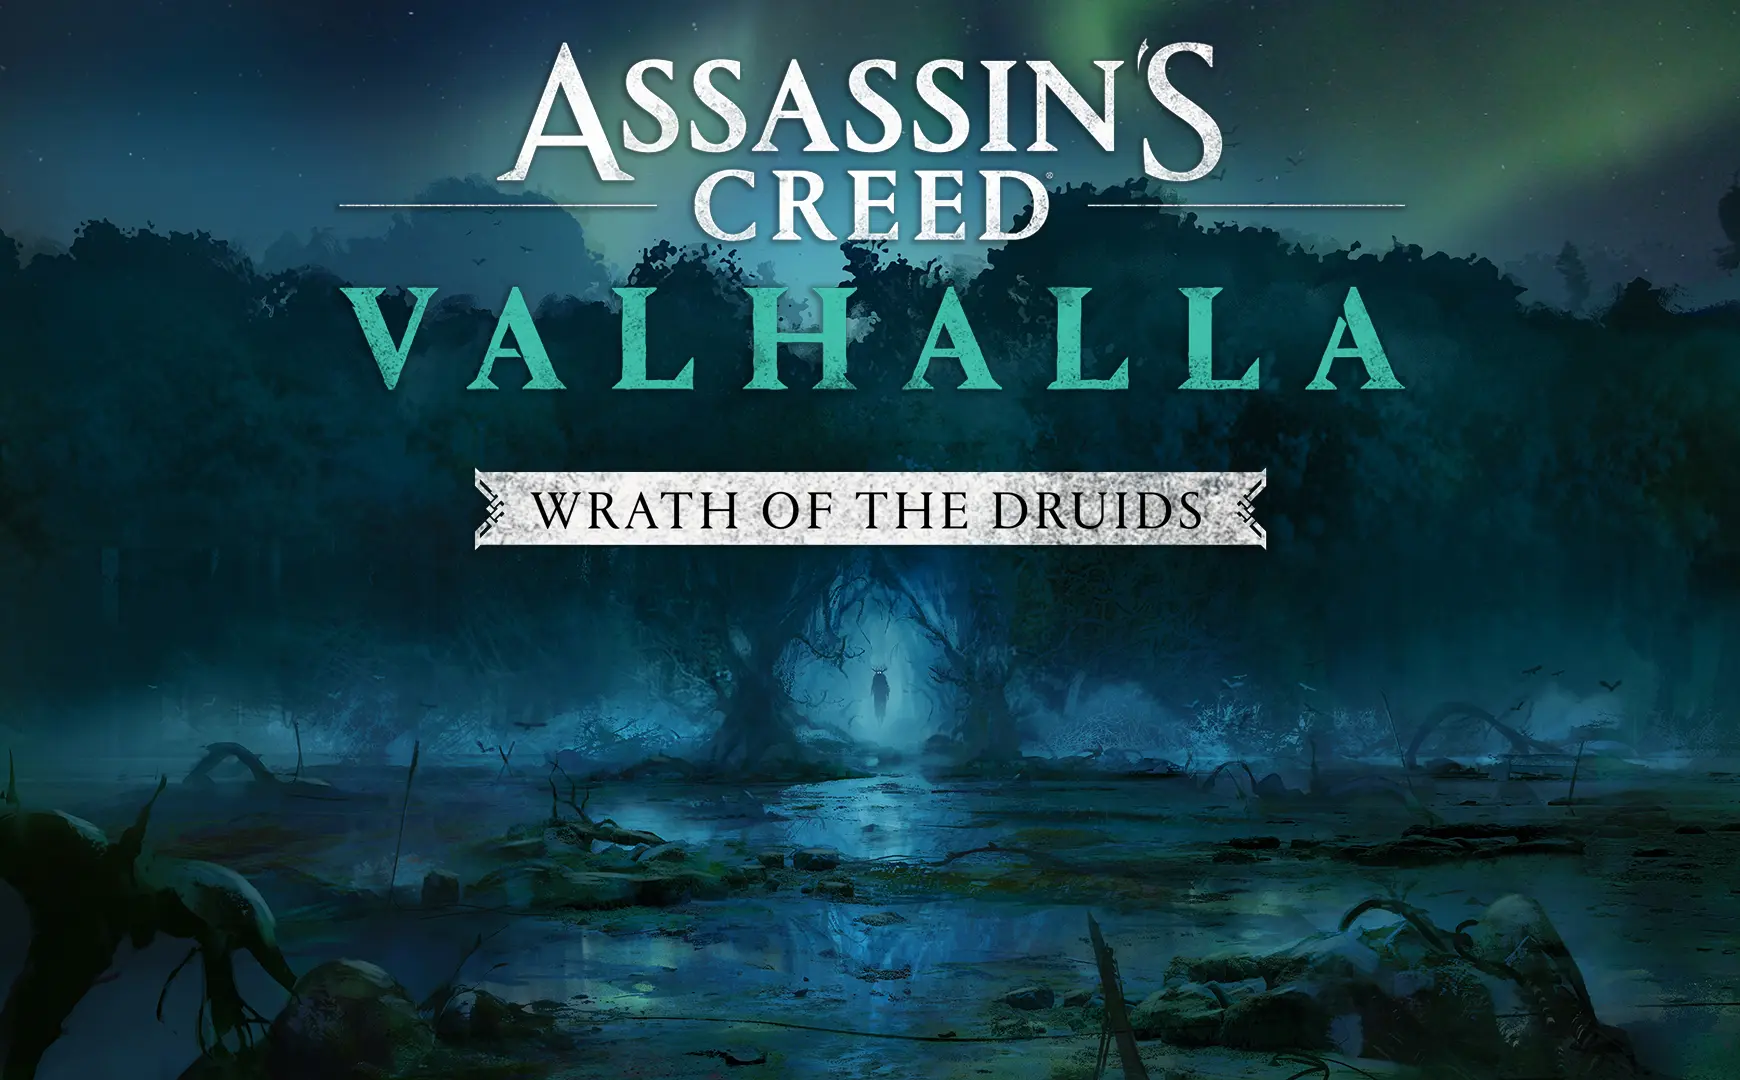 Assassins Creed: Valhalla Wrath of the Druids DLC